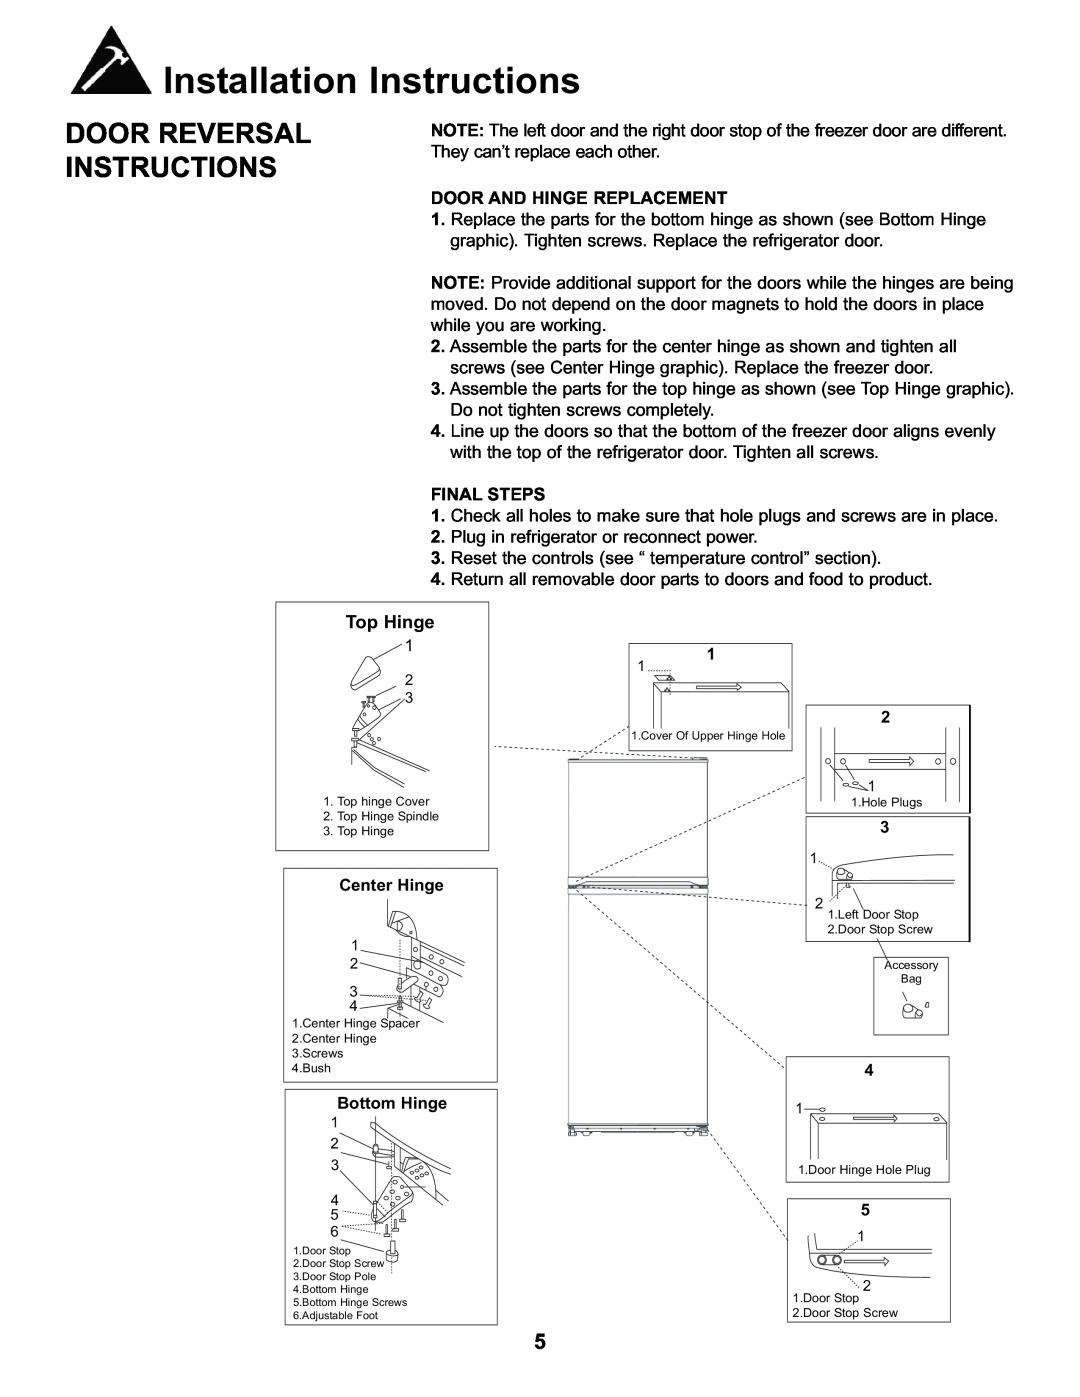 Danby DFF282SLDB Door And Hinge Replacement, Final Steps, Center Hinge, Bottom Hinge, Installation Instructions, Top Hinge 